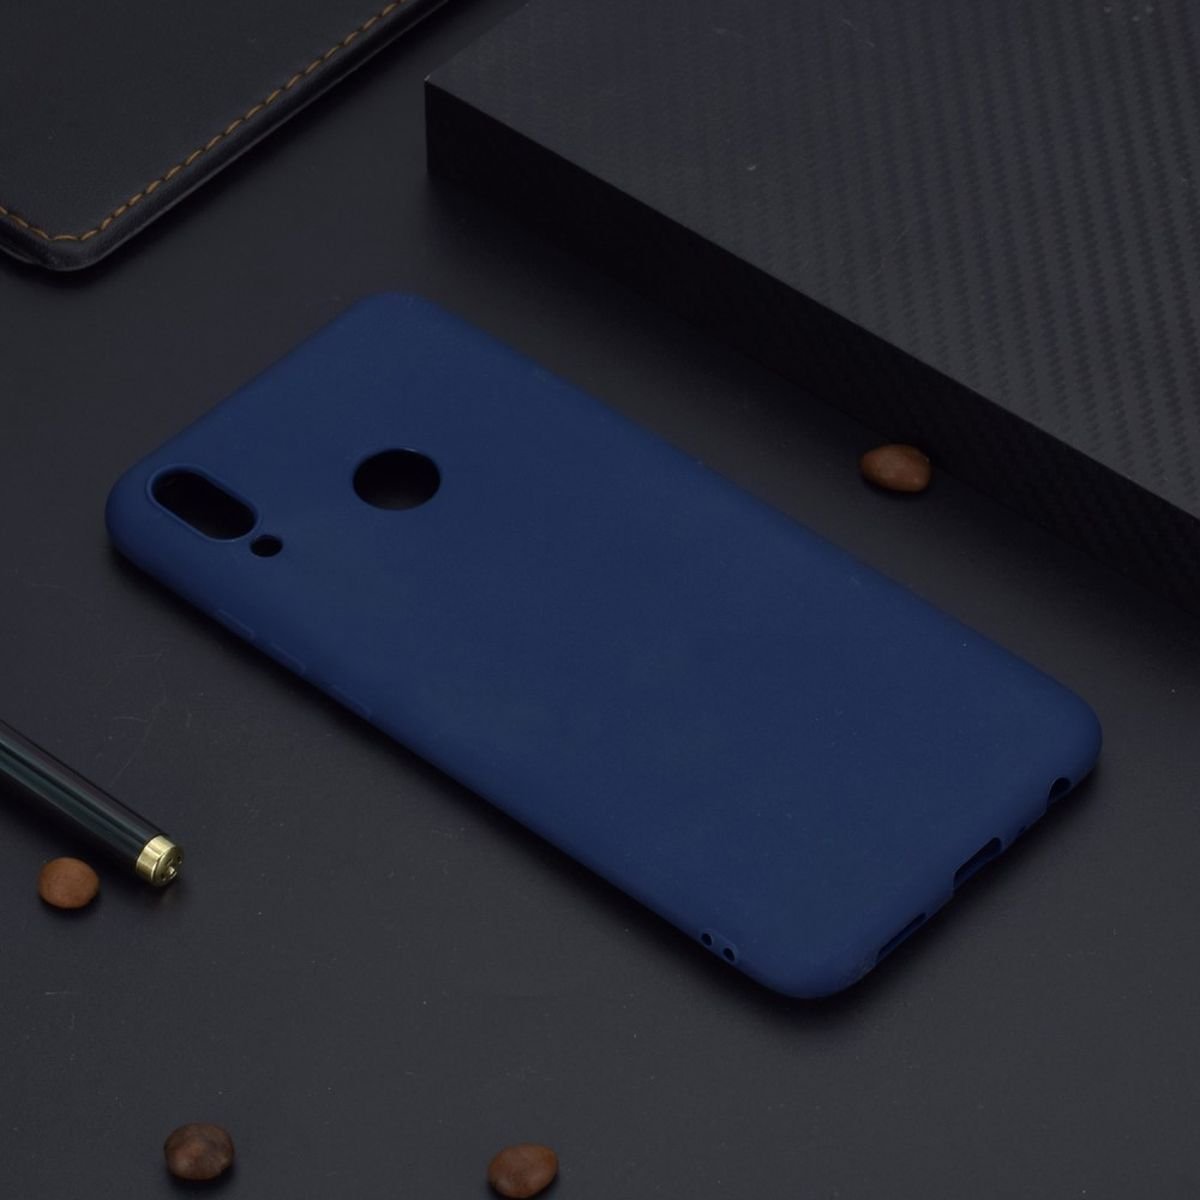 COVERKINGZ Handycase Blau Smart aus Silikon, P (2019), Backcover, Huawei